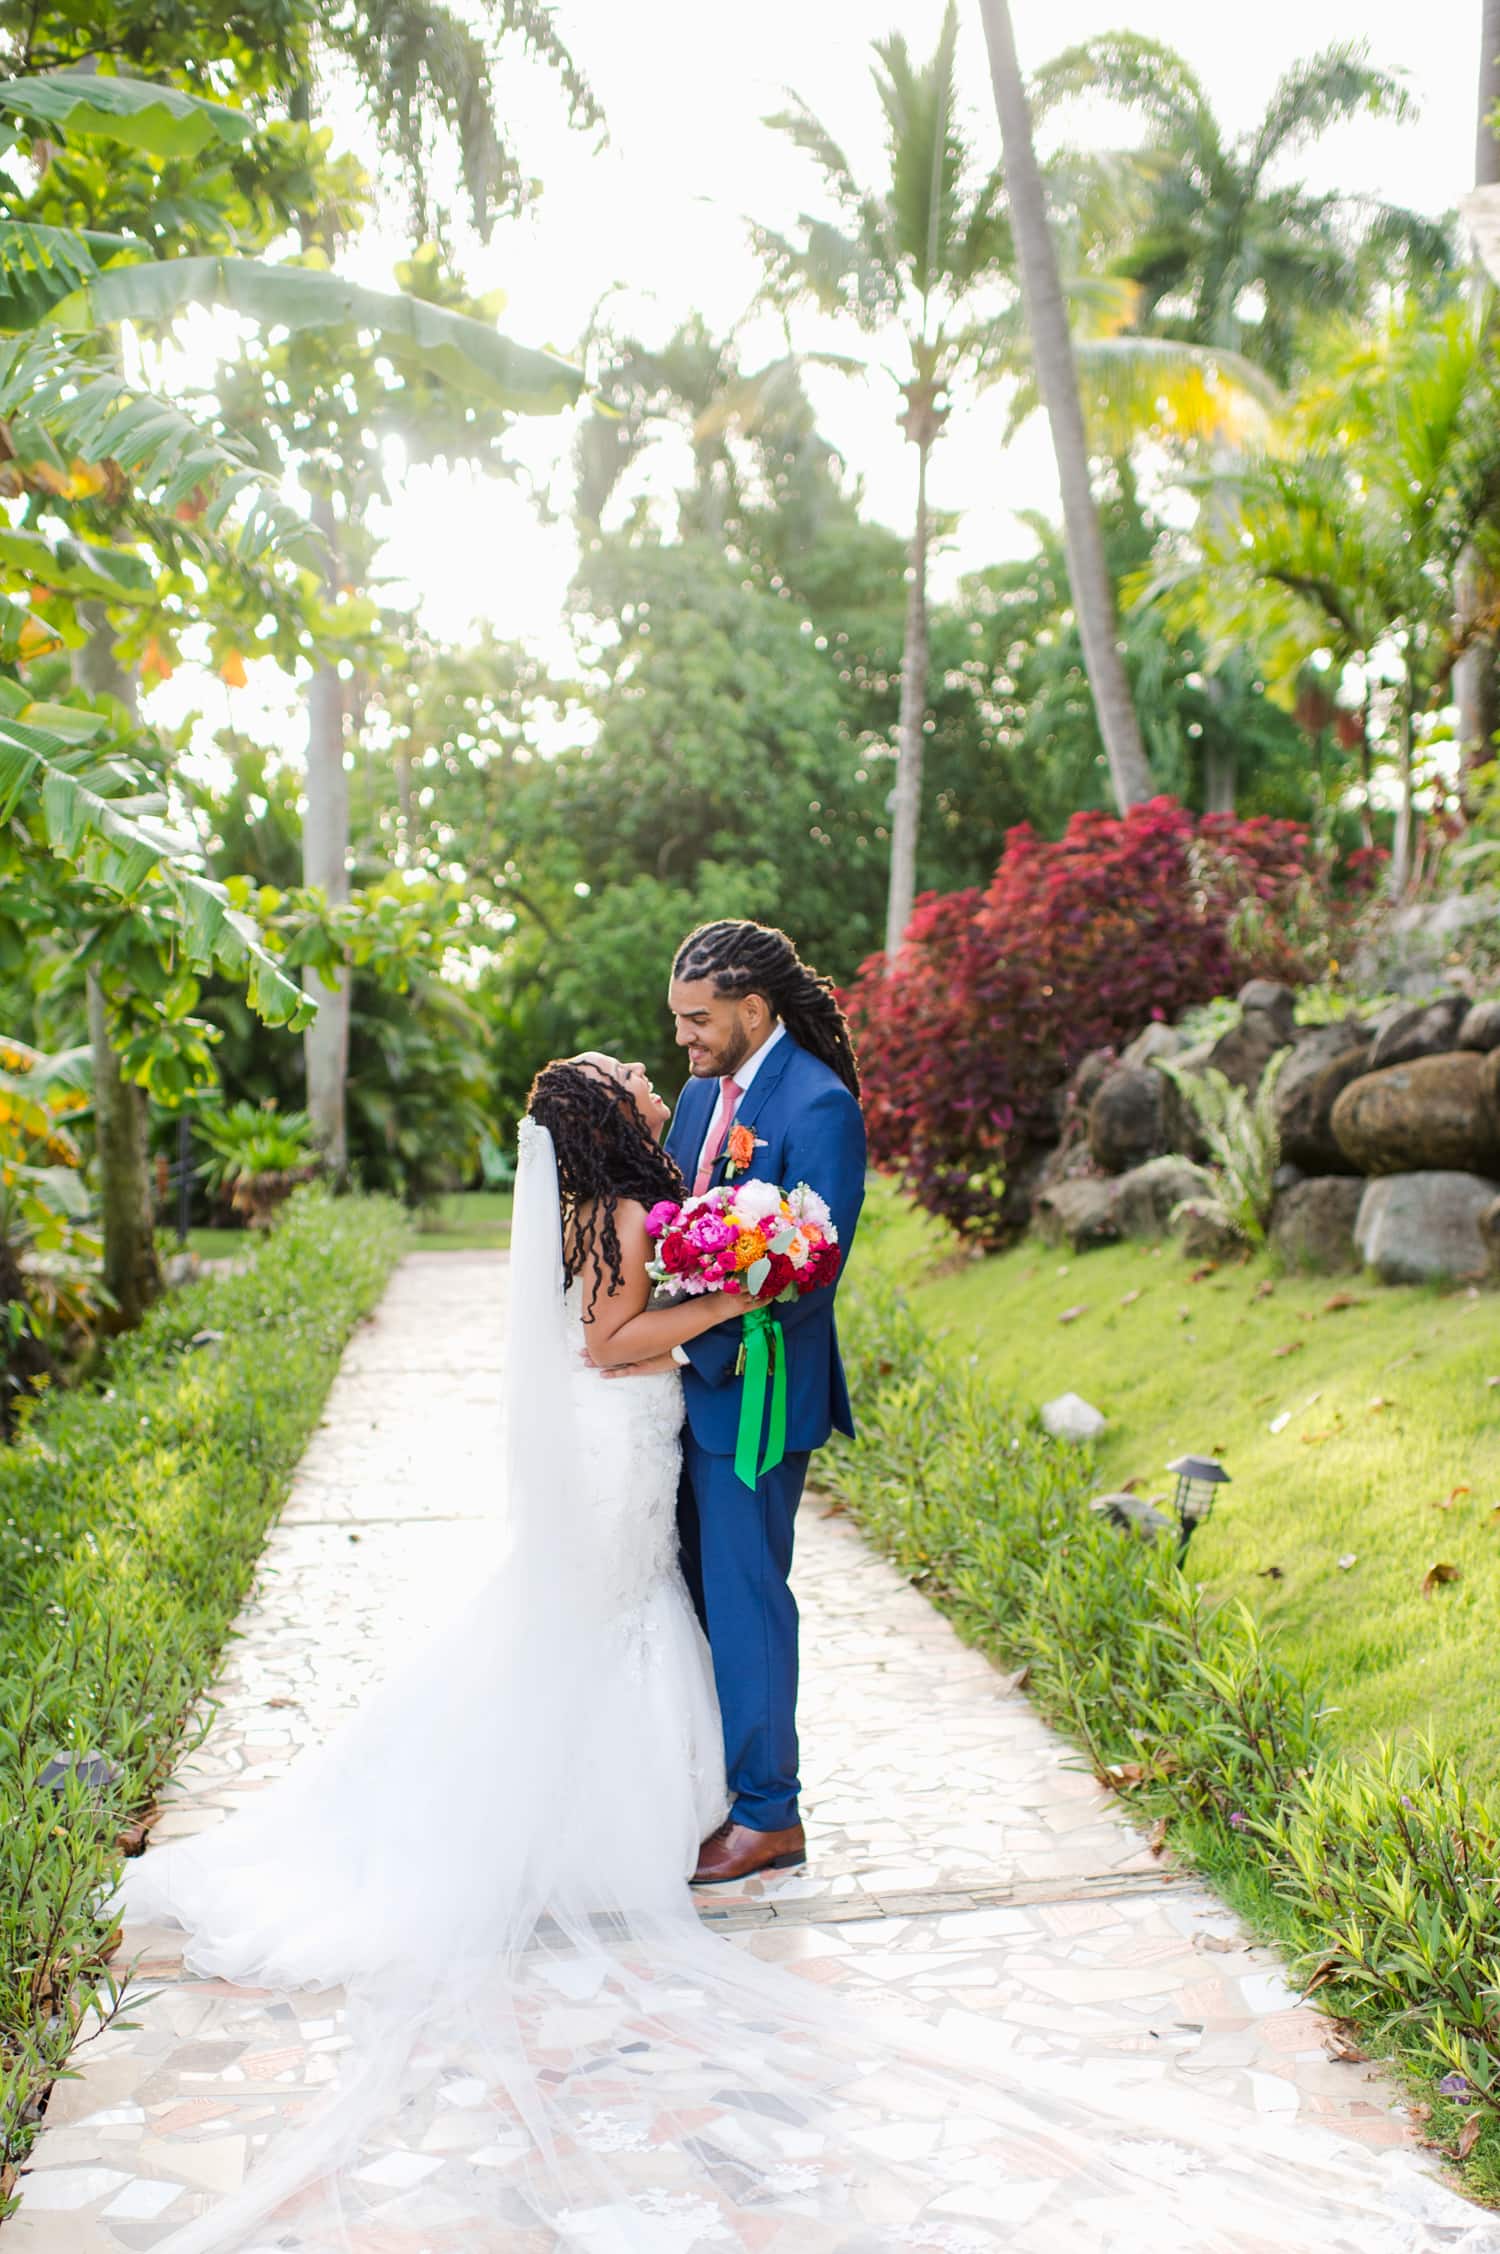 Hacienda Siesta Alegre destination wedding photography by Camille Fontanez